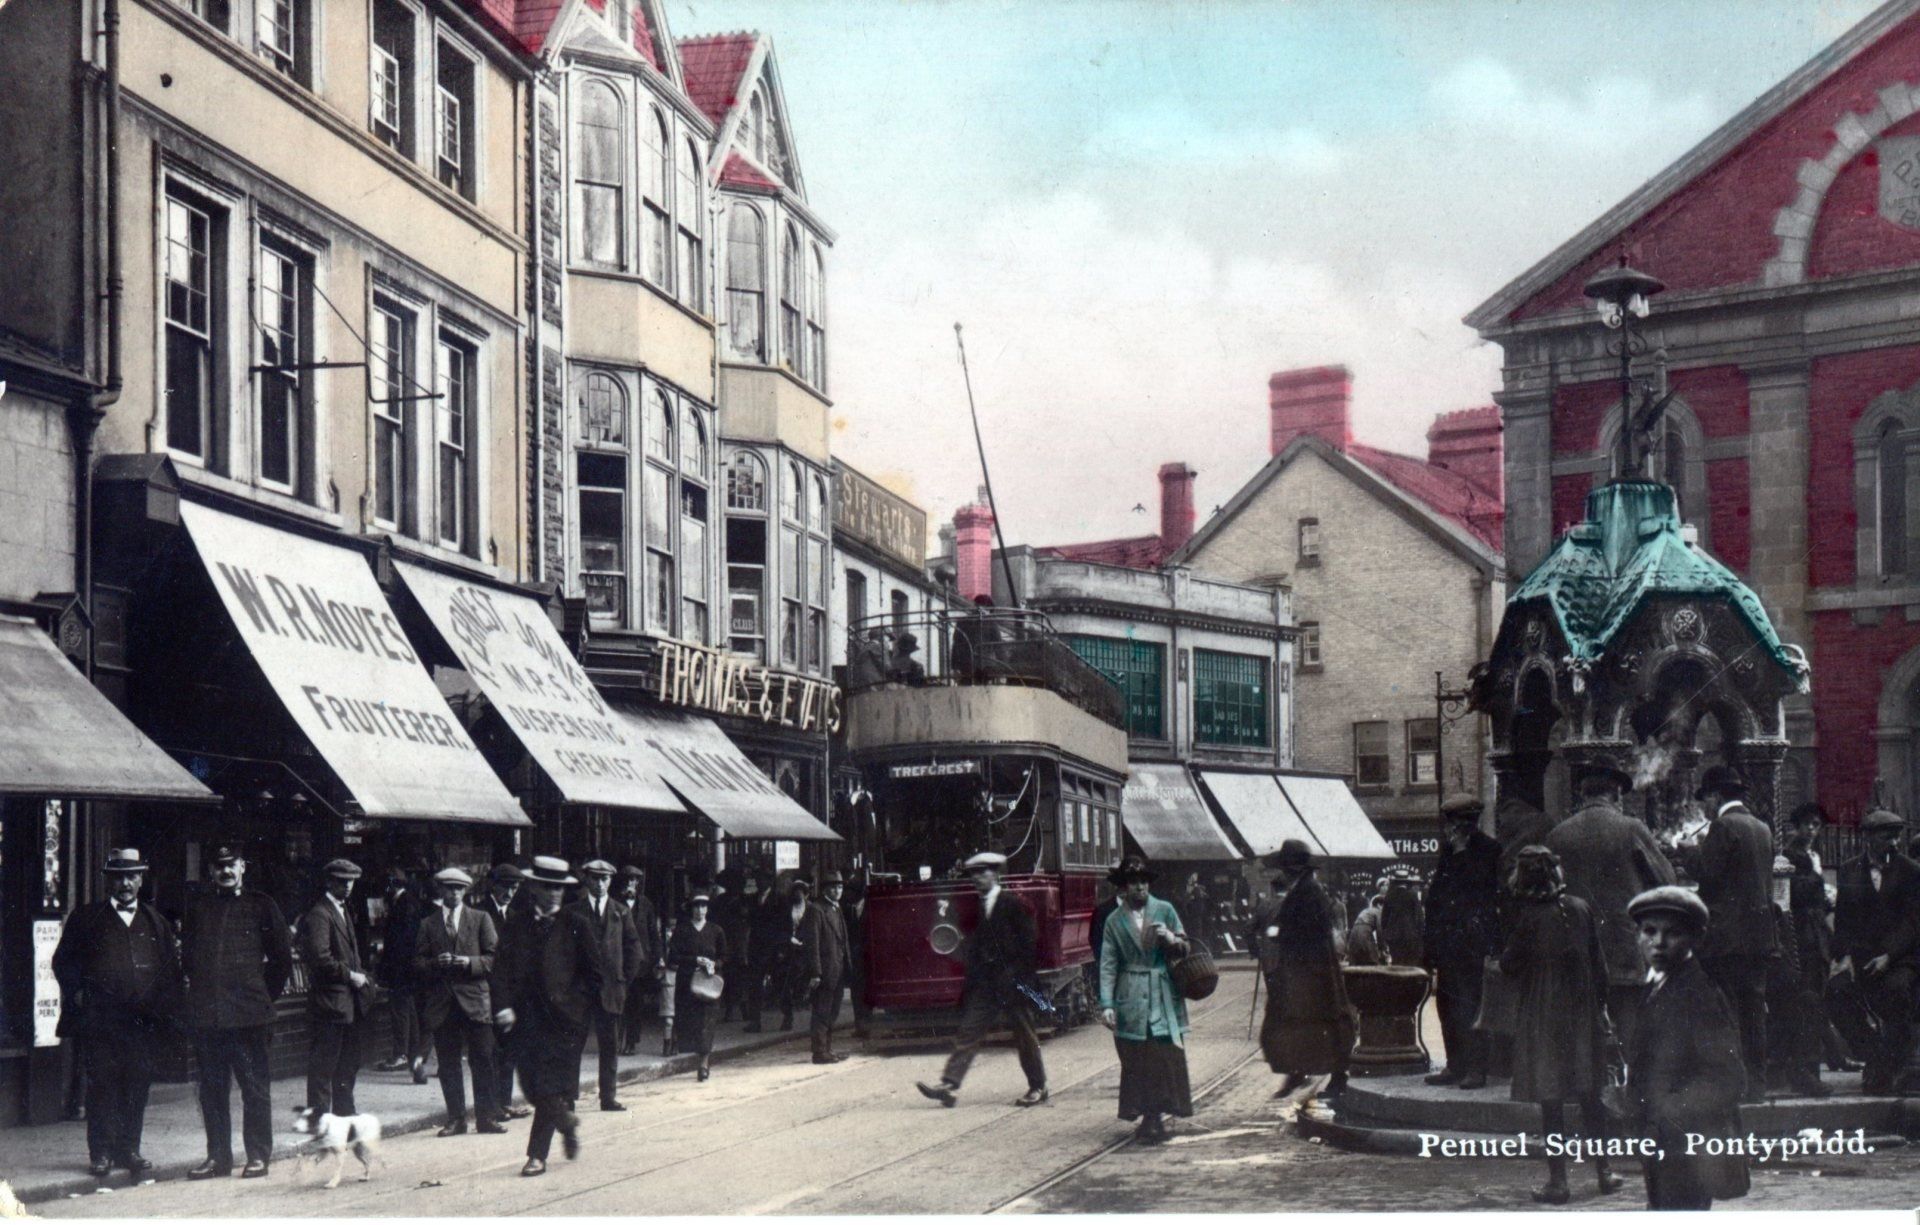 Penuel Square, Taff Street early 20th century